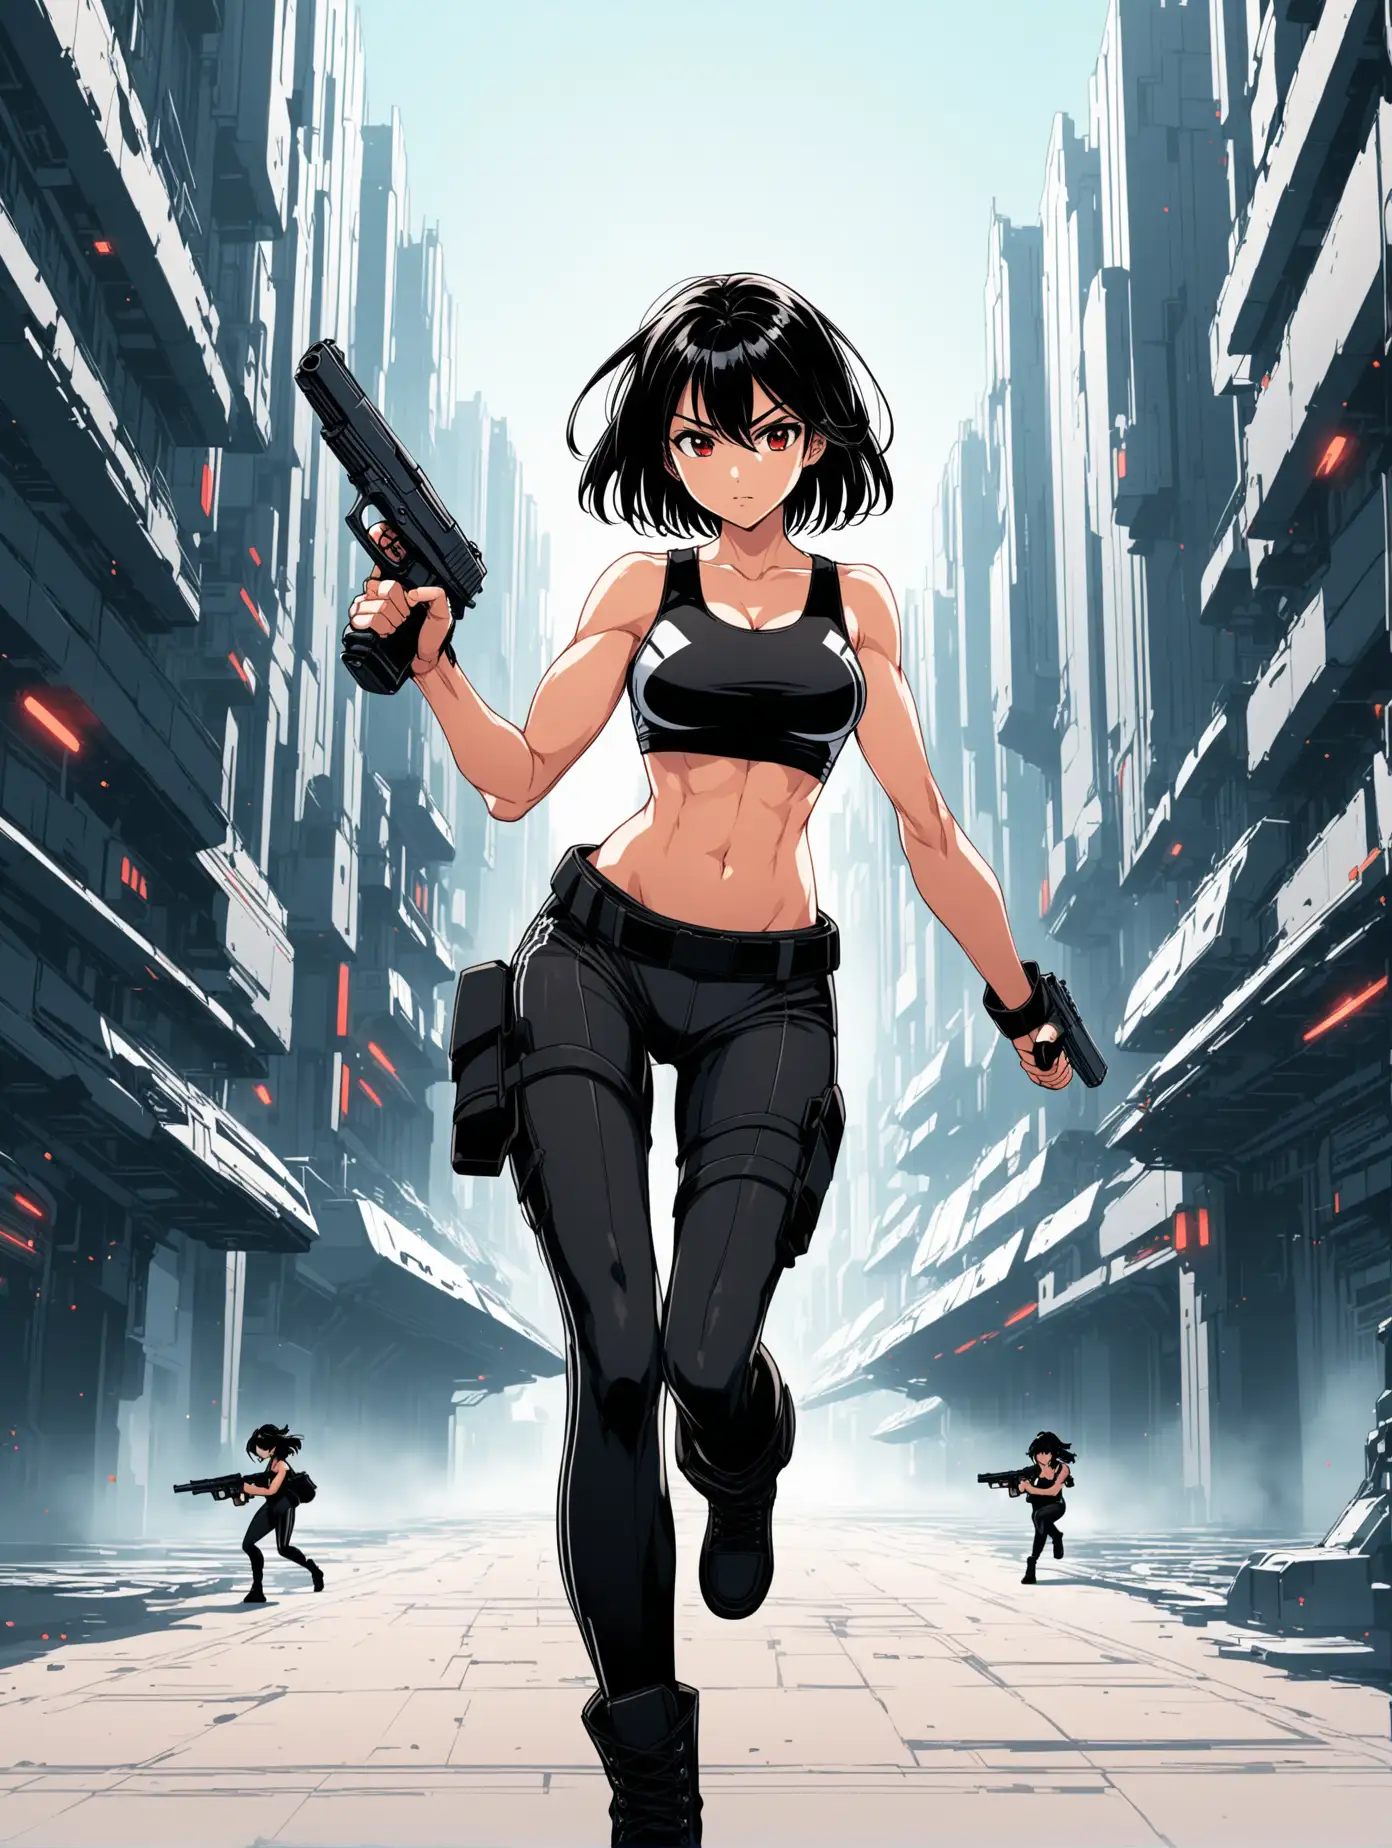 Futuristic Anime Heroine DualWielding Handguns in Urban Combat